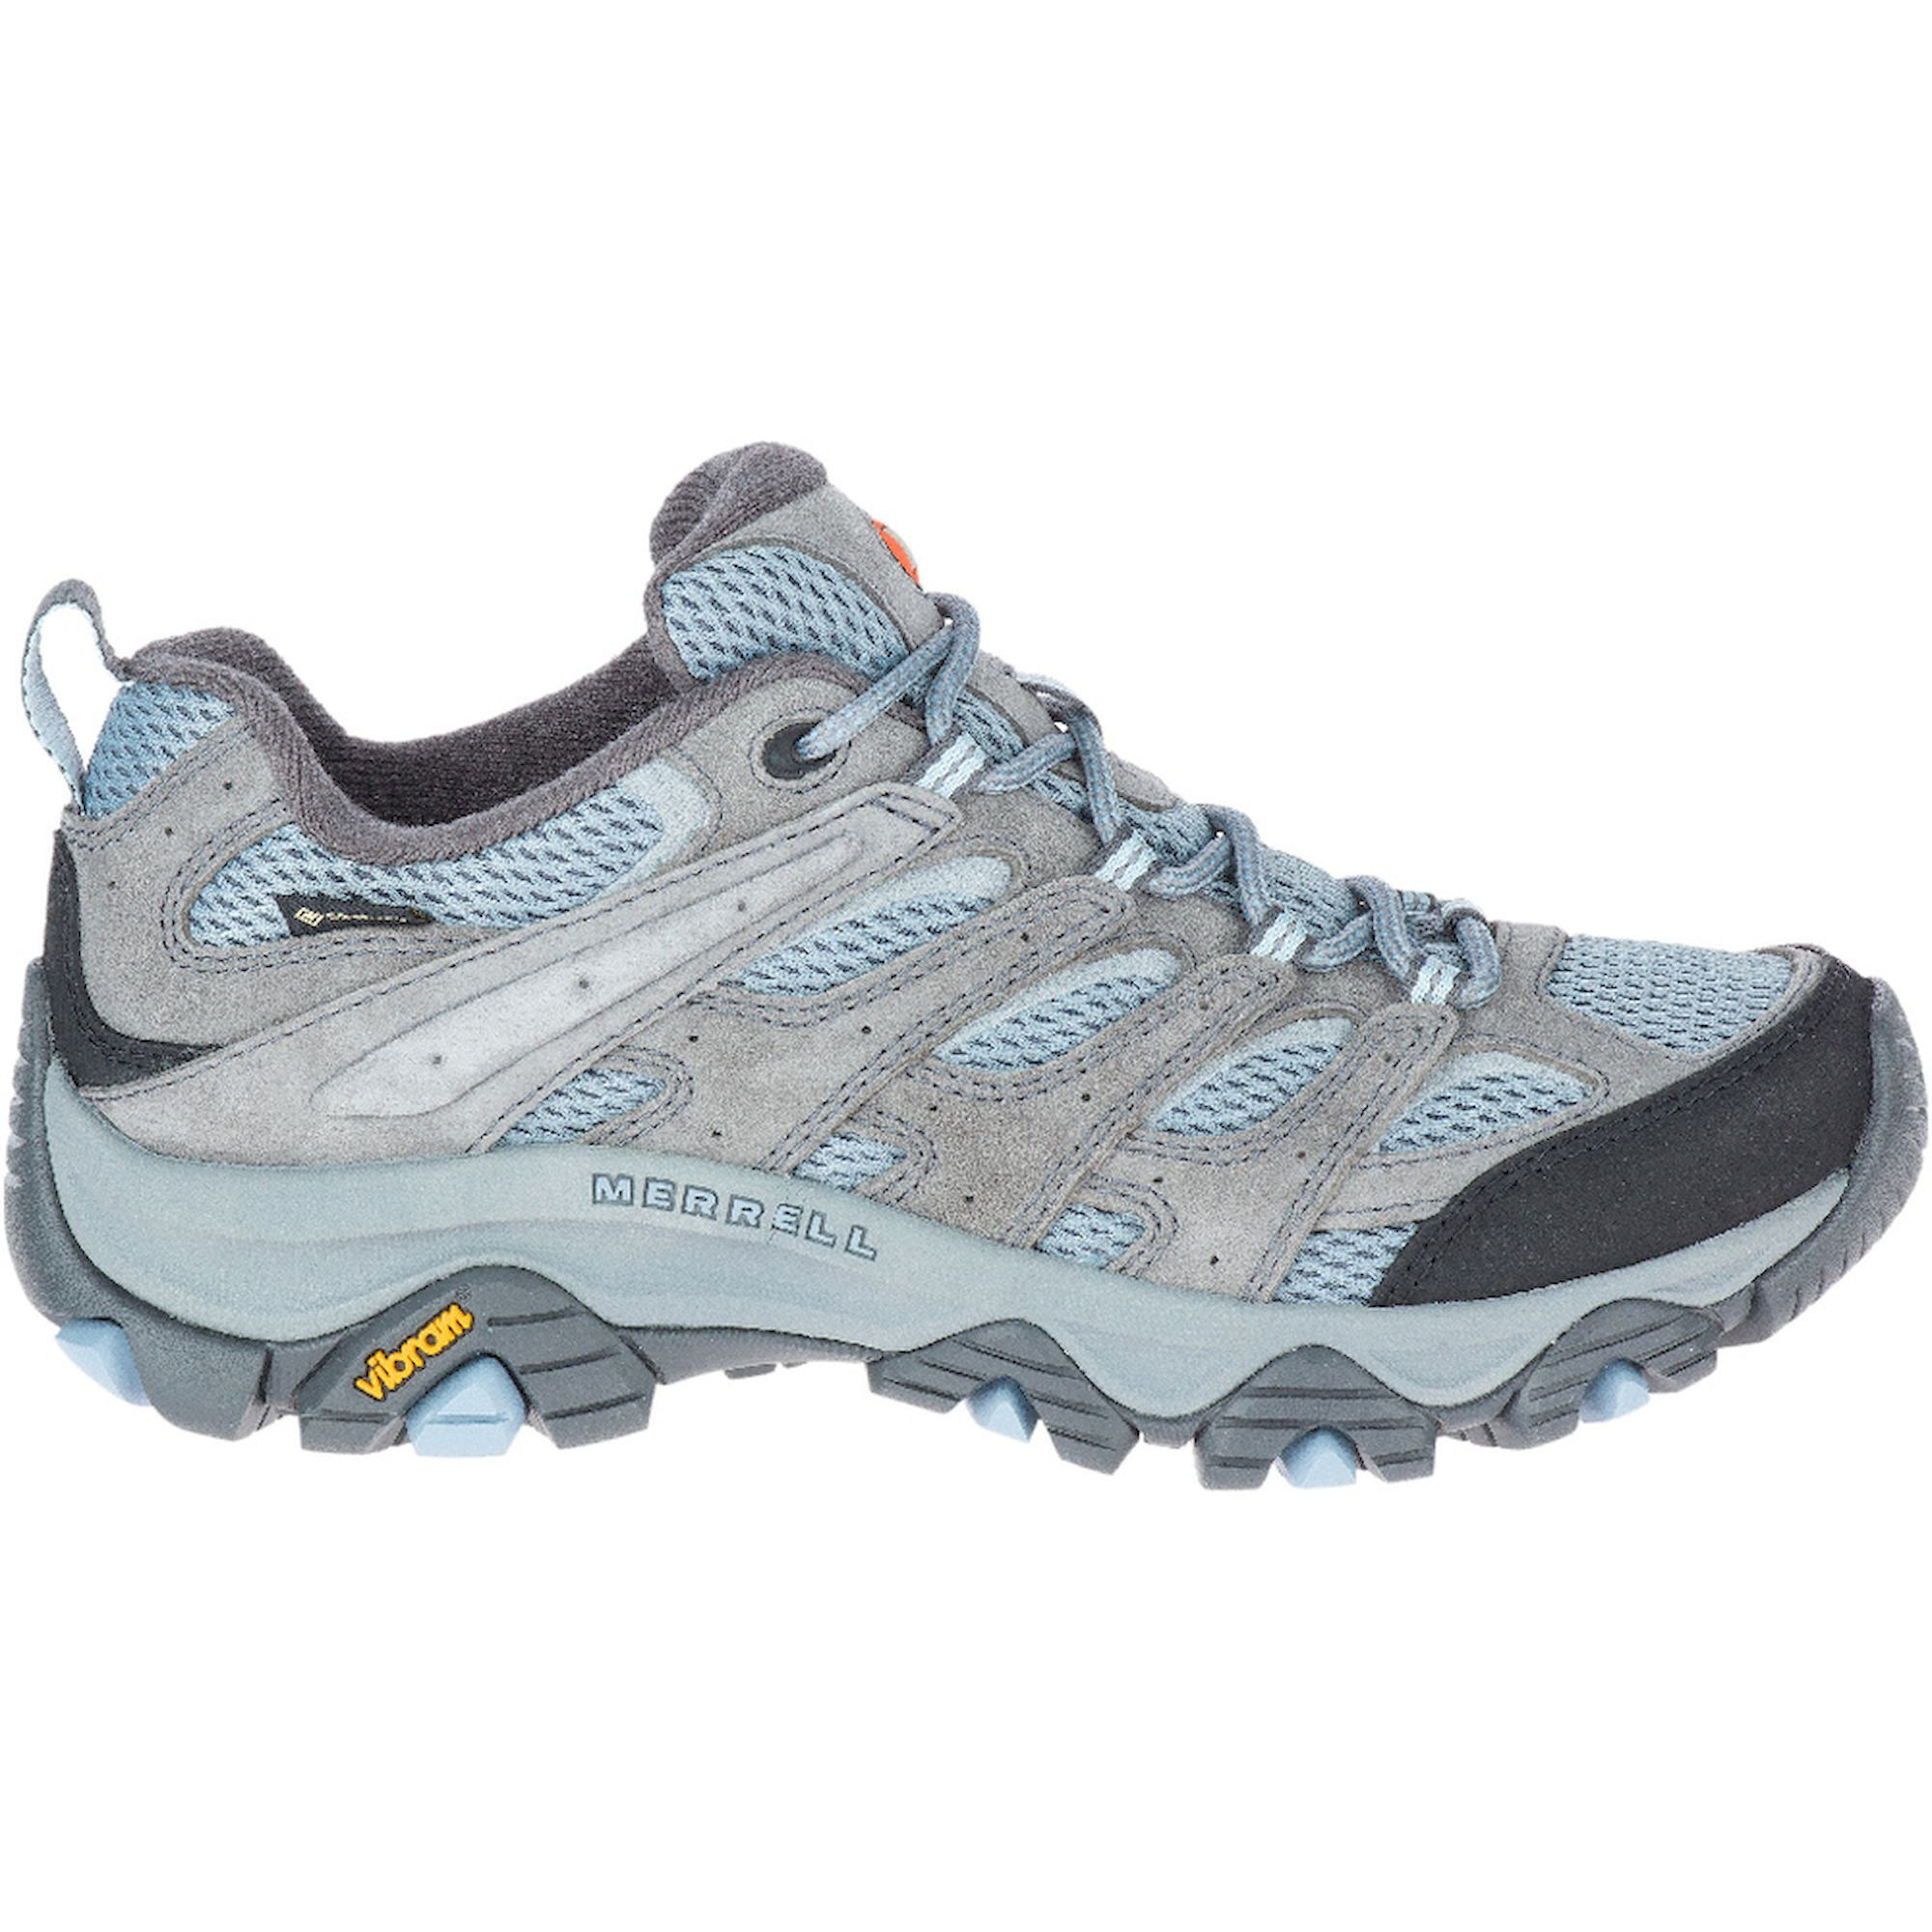 Merrell Moab 3 GTX - Hiking shoes - Women's